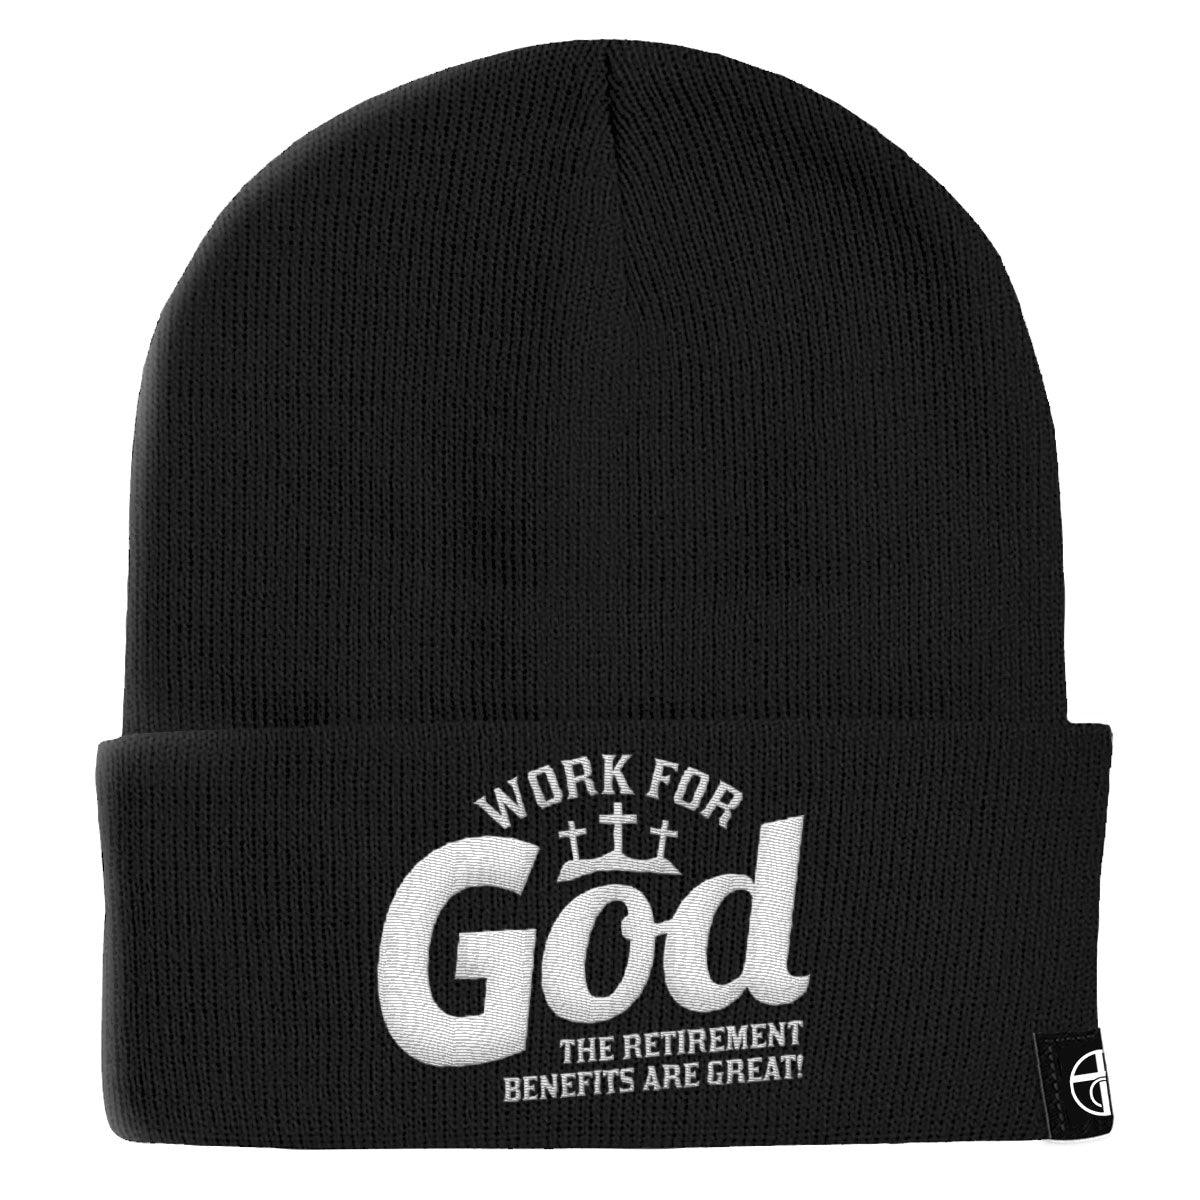 Work For God Beanies - Our True God